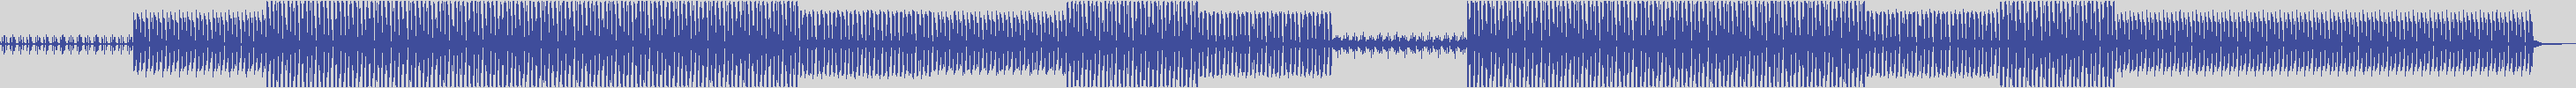 nf_boyz_records [NFY056] Bret Moore - Castlemania [Tribal Edit] audio wave form